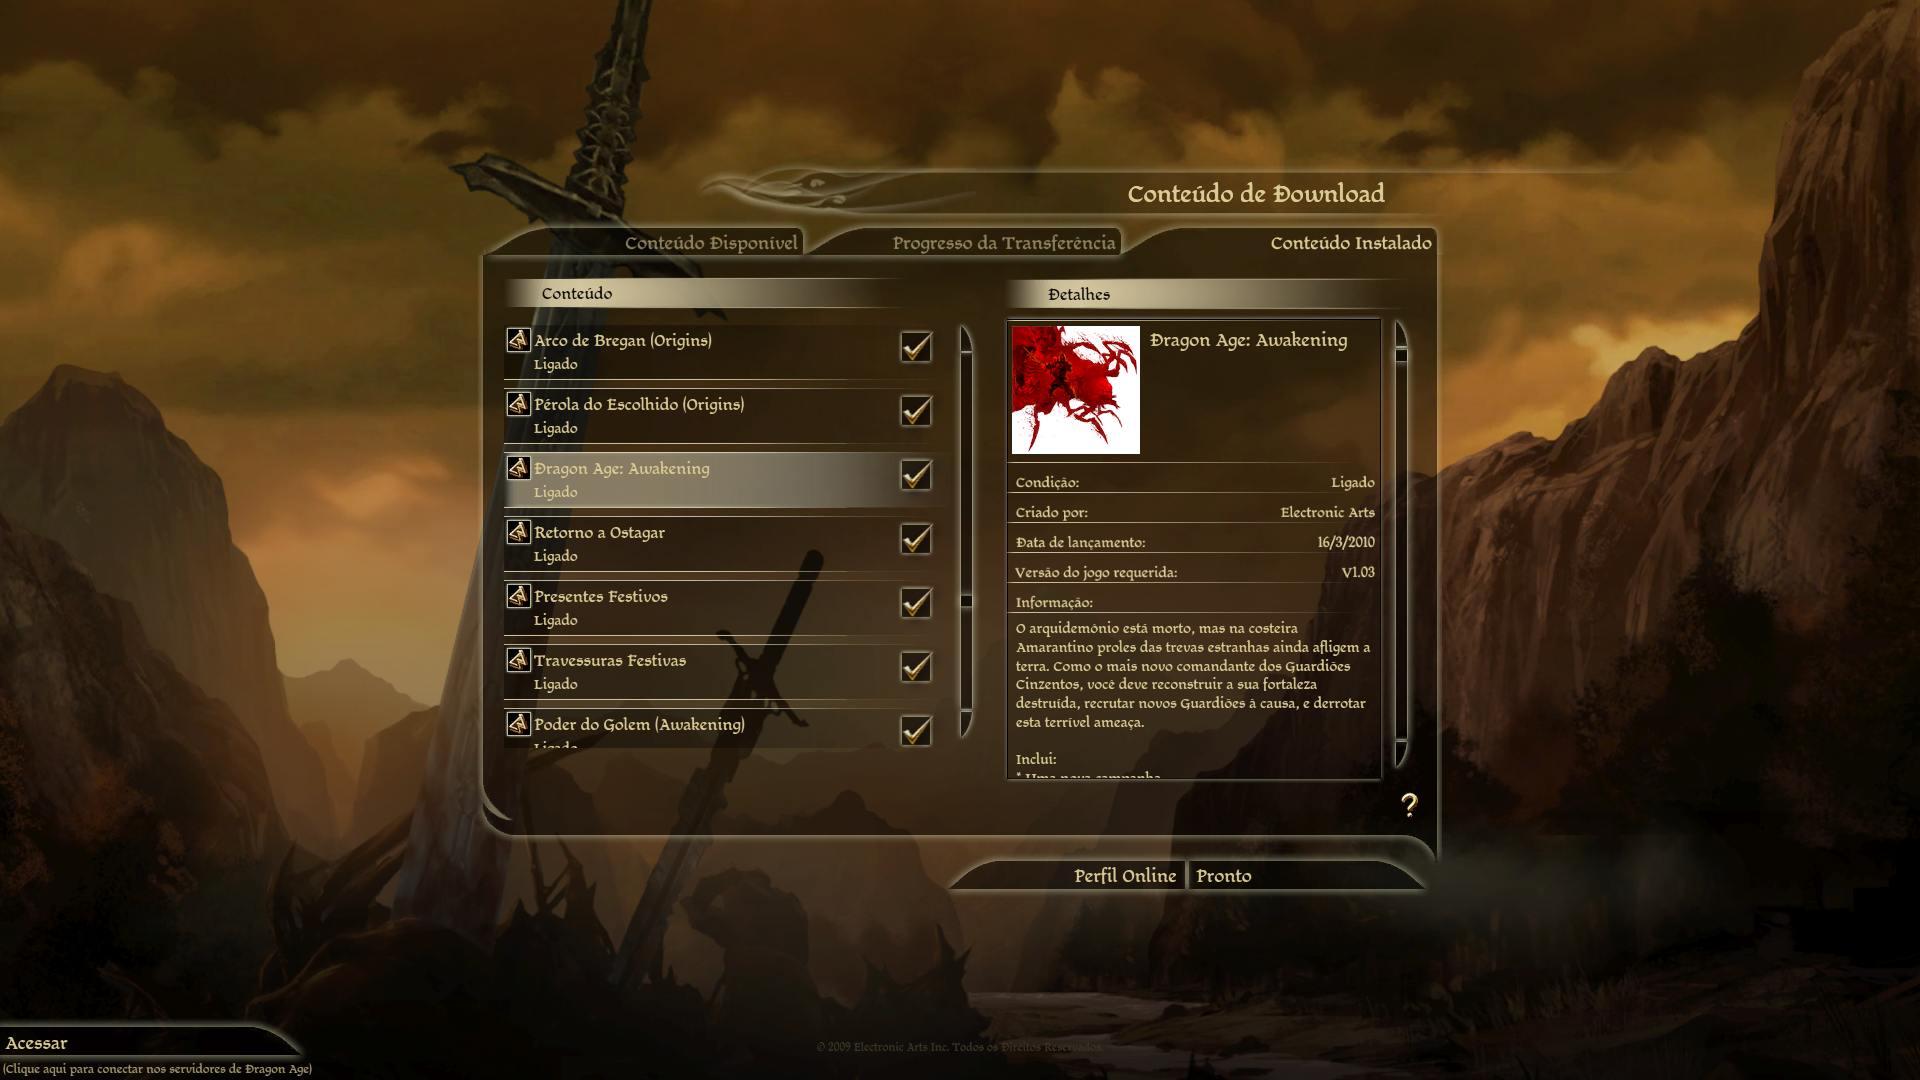 Tradução do Dragon Age II – PC [PT-BR]